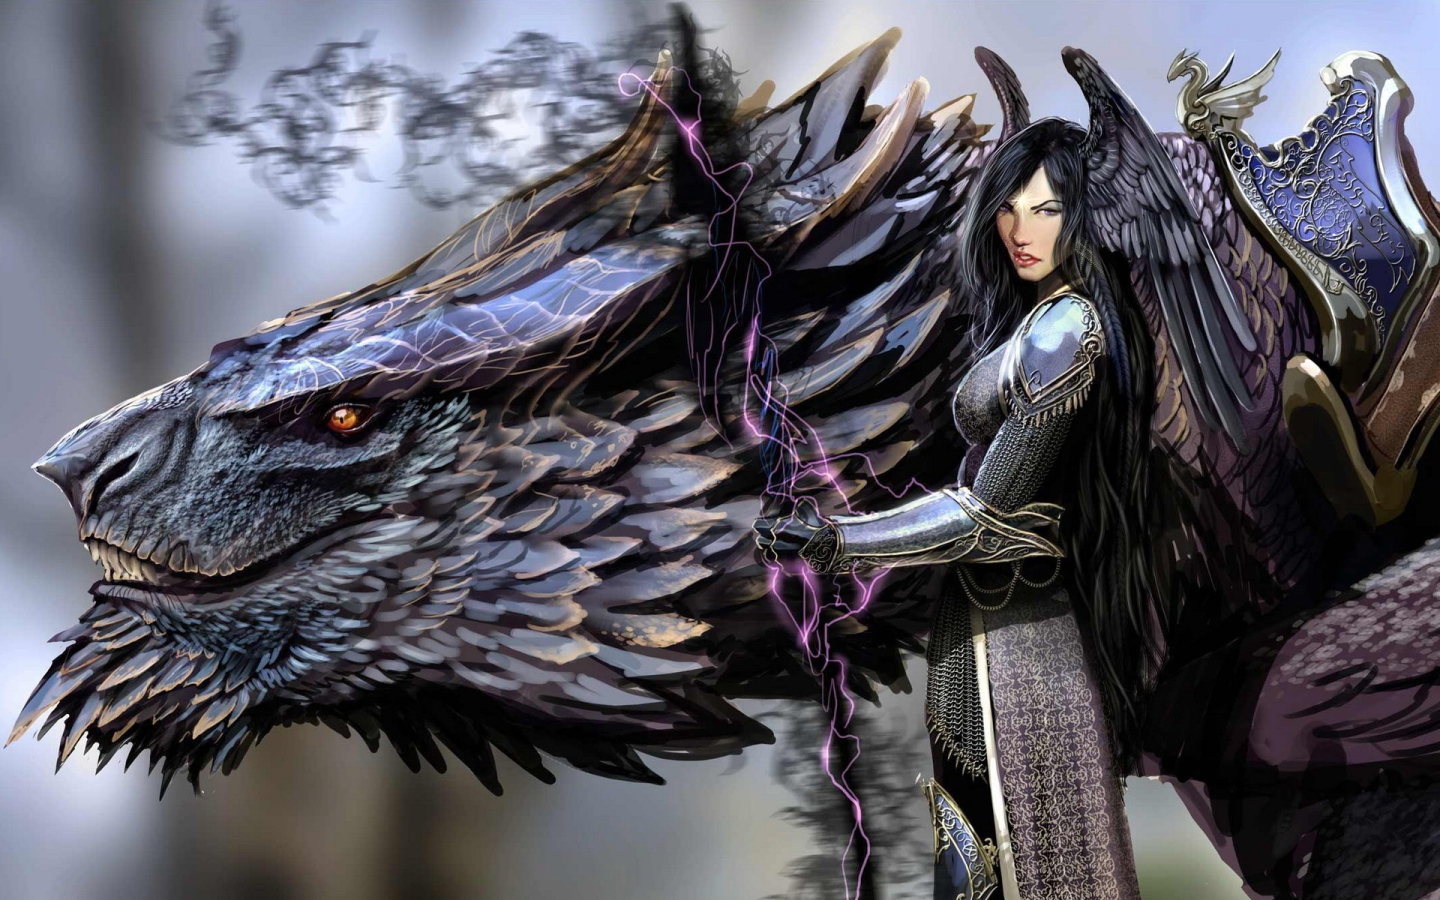 Anime girl holds power over the dragon